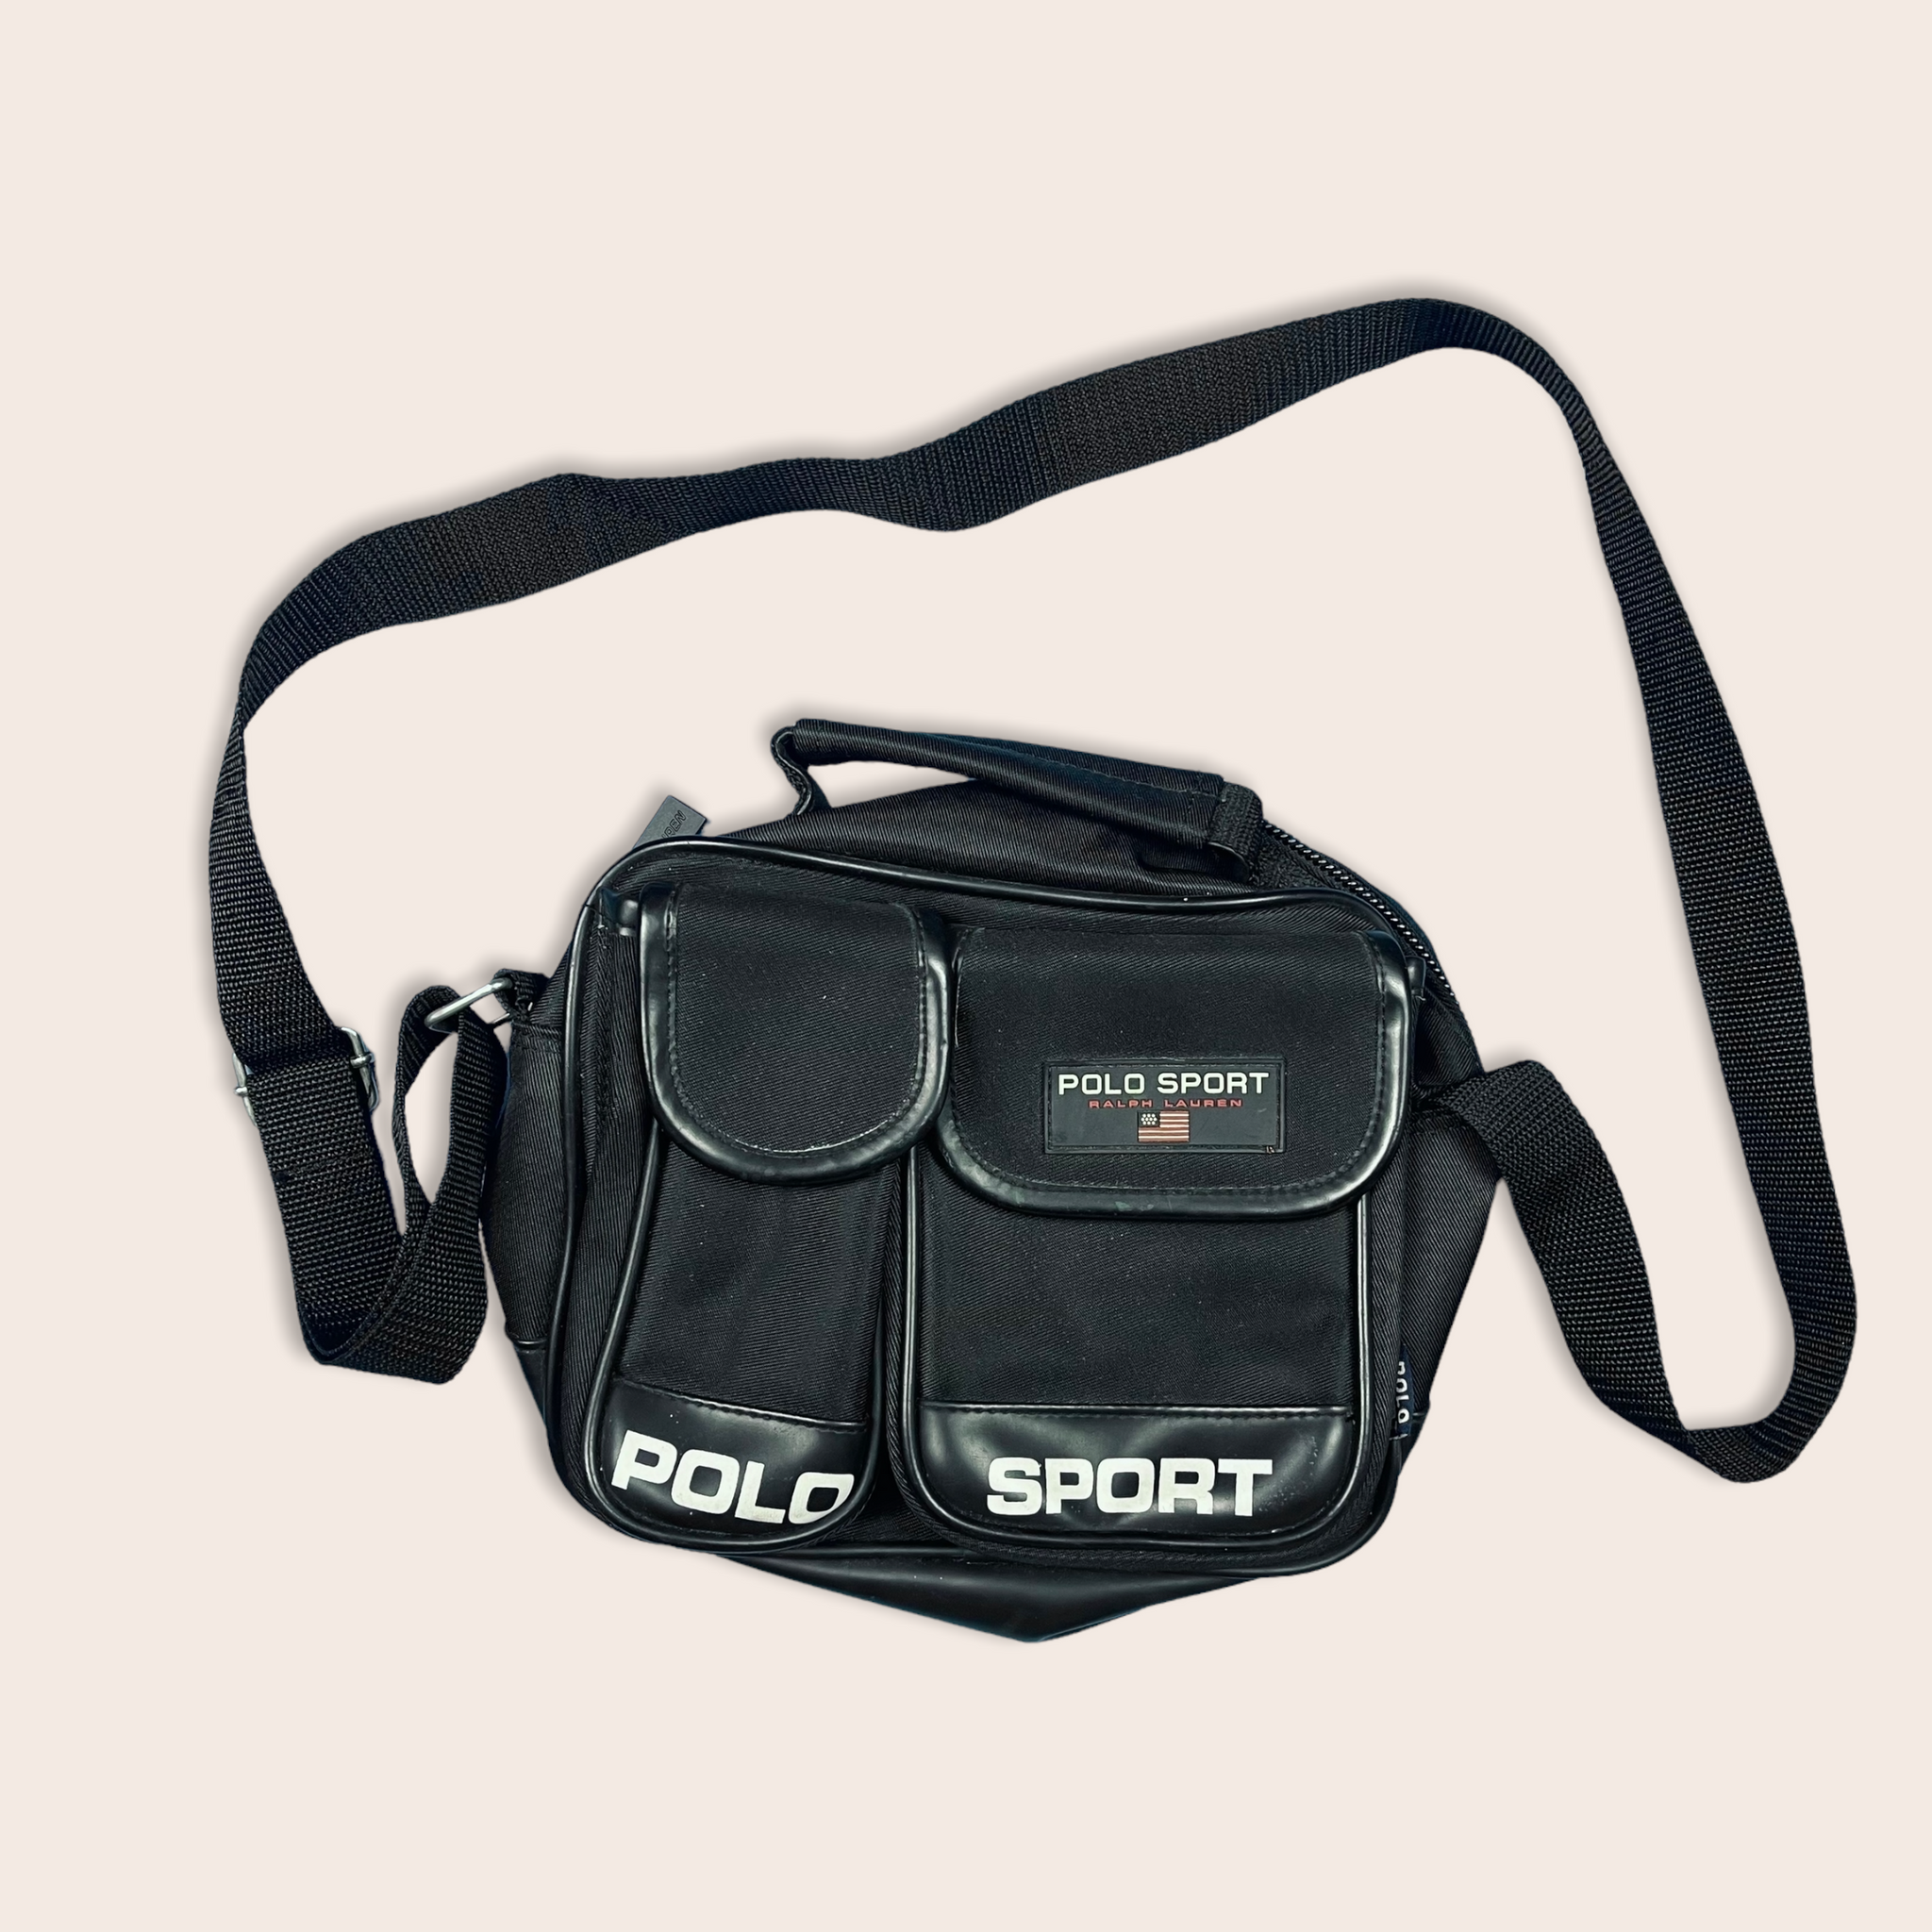 polo sport ralph lauren messenger bag crossbody bag-purse @i3 | eBay